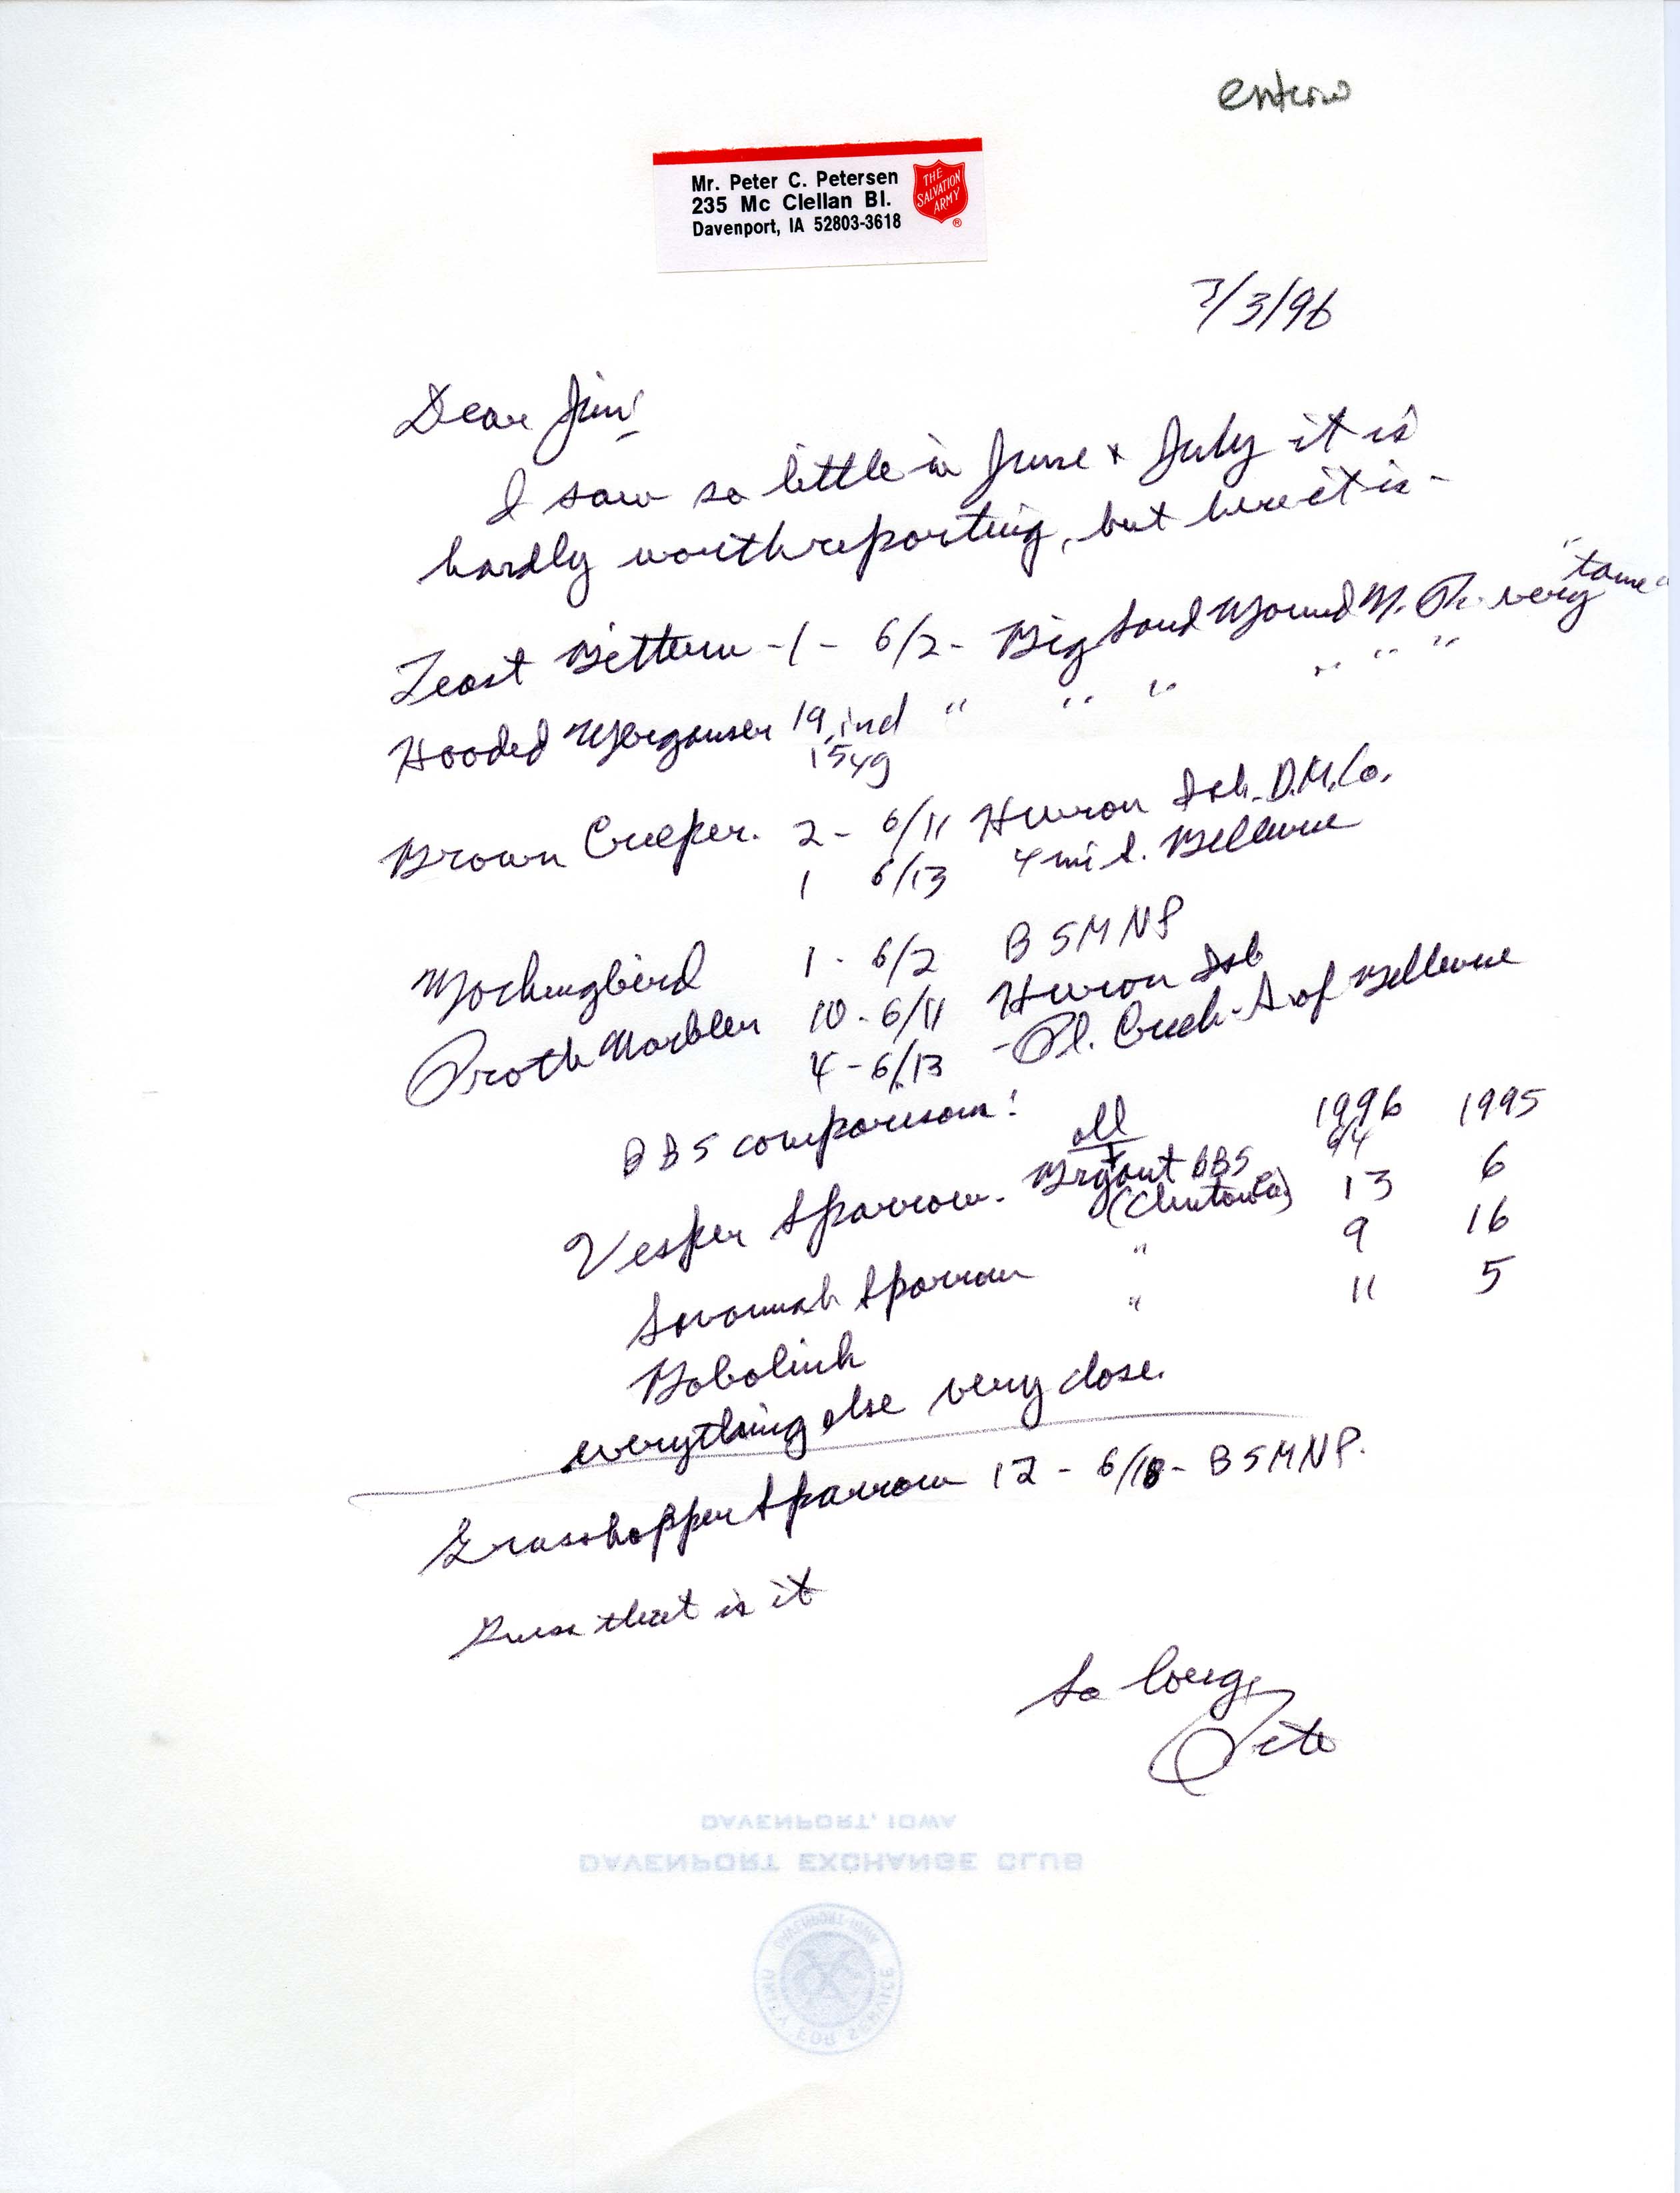 Peter C. Petersen letter to James J. Dinsmore regarding bird sightings, July 3, 1996